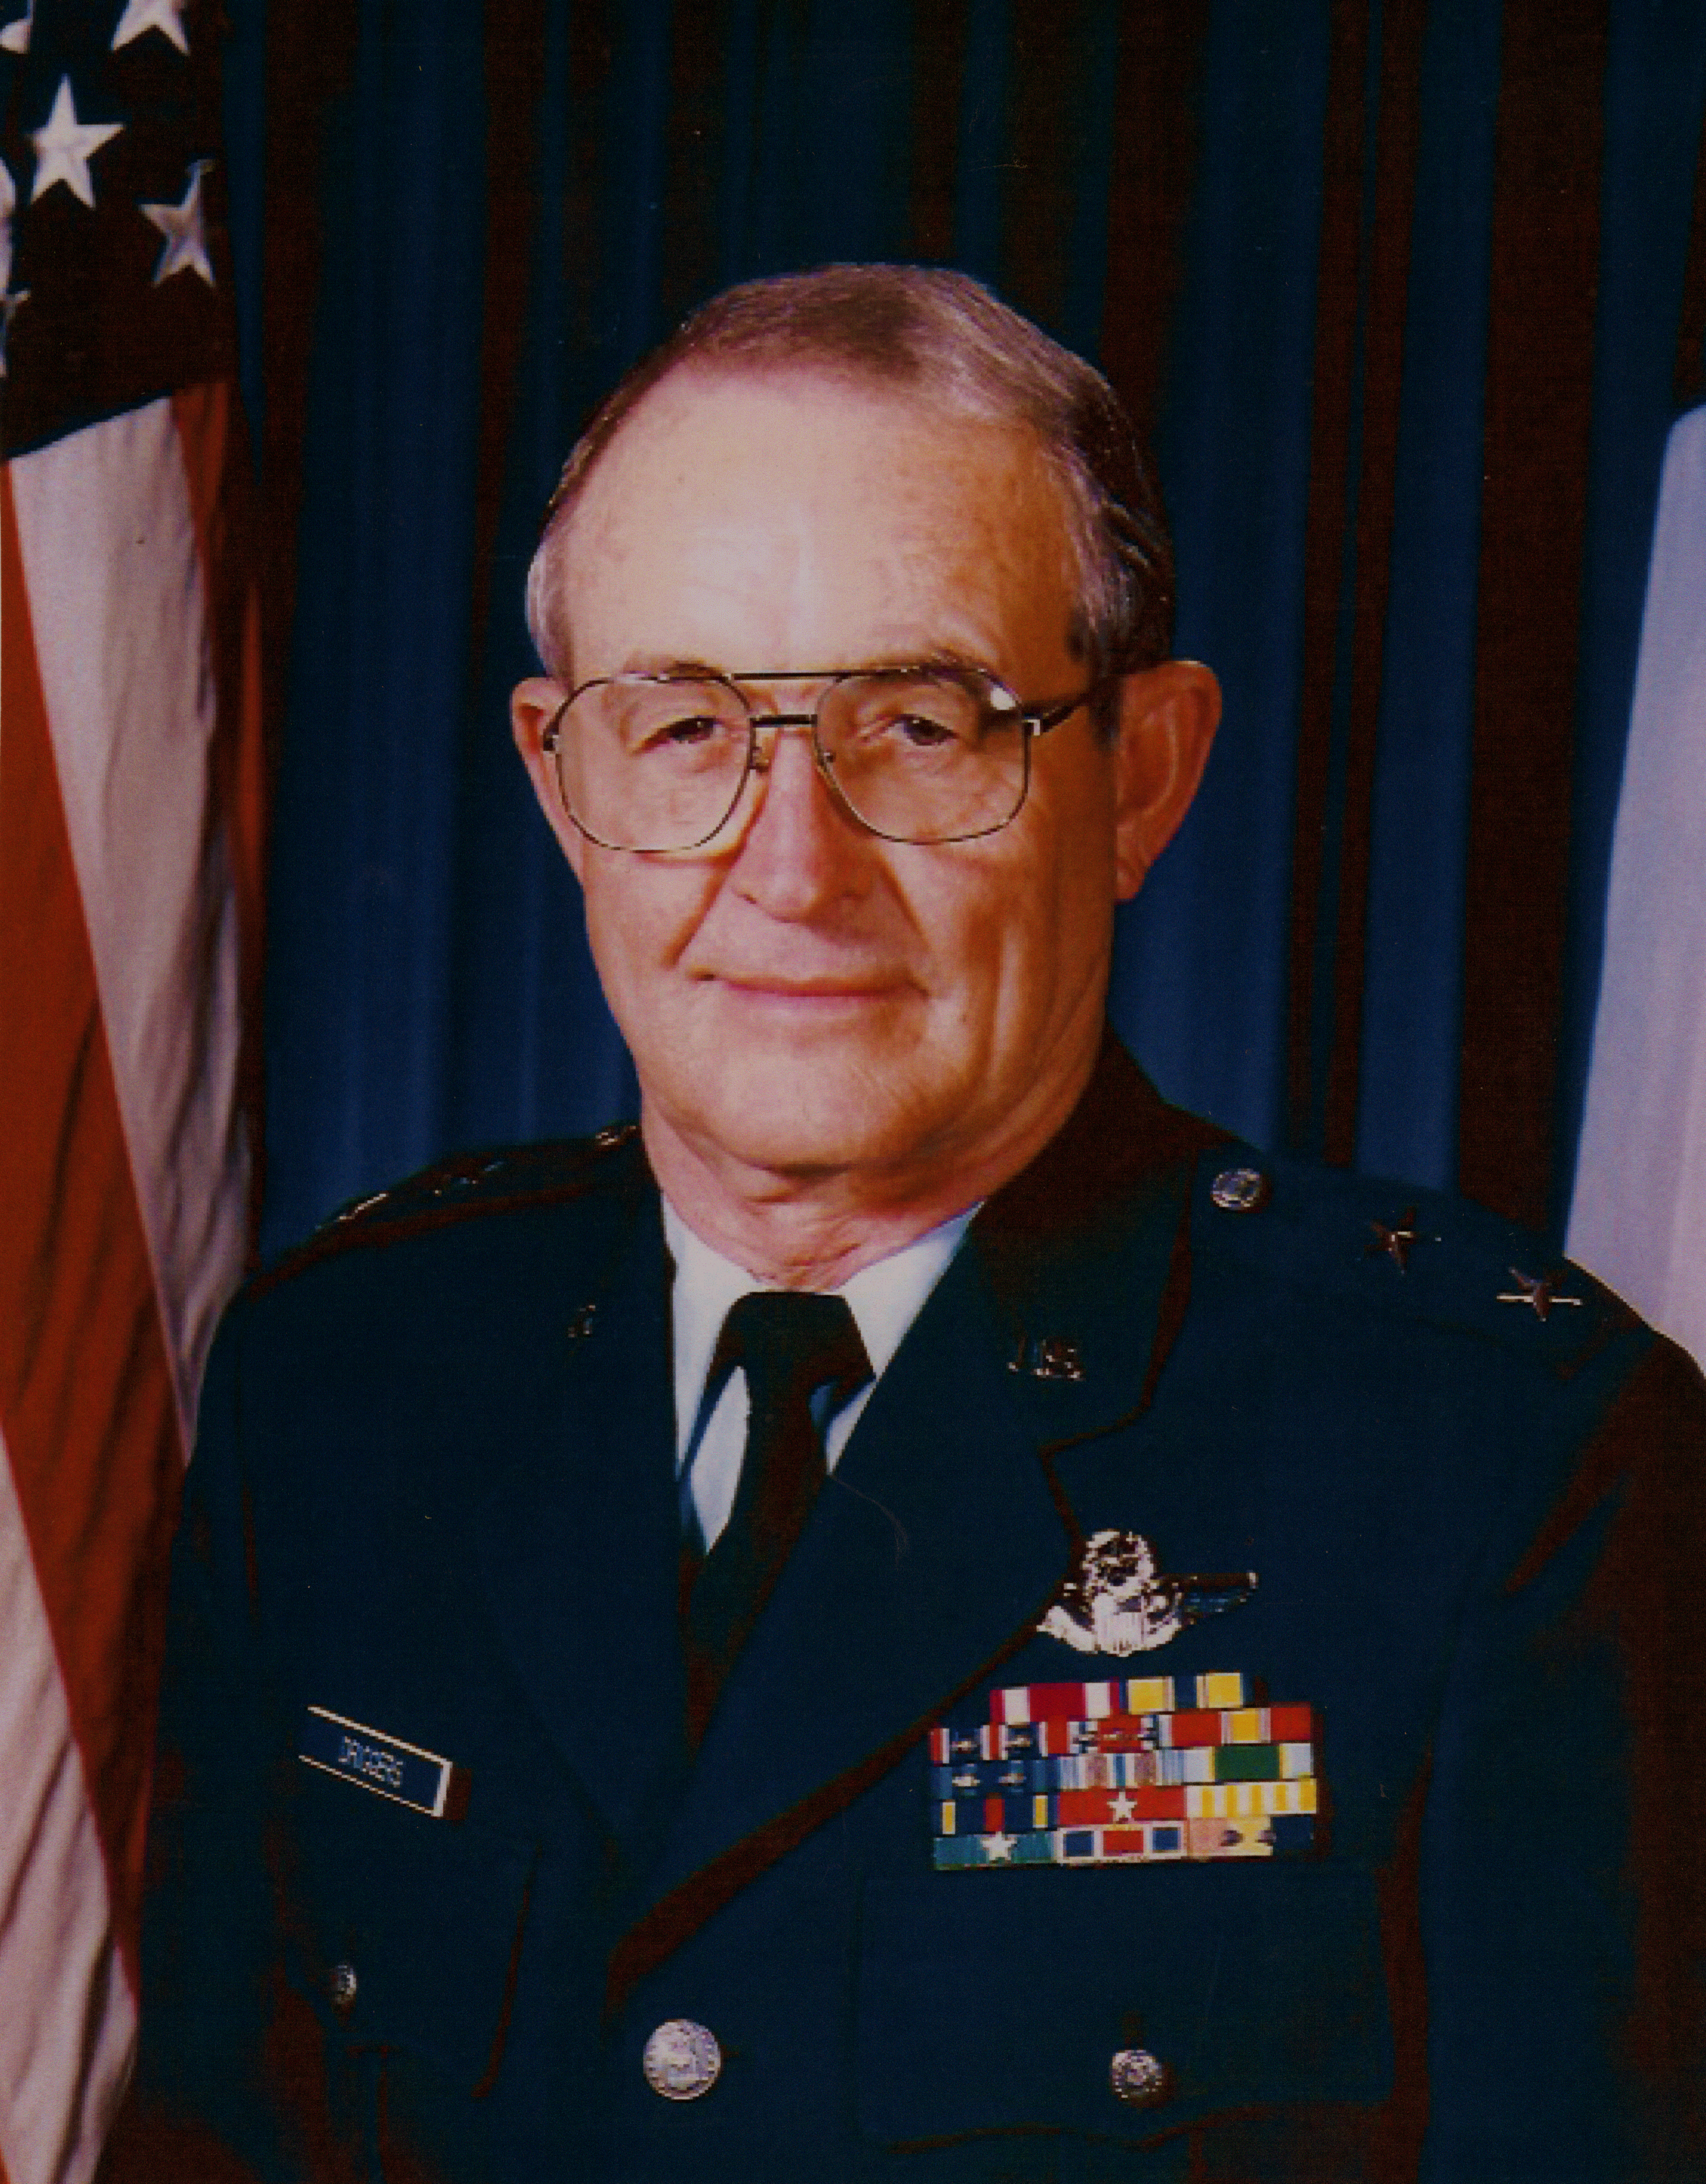 Major General Rex Driggers